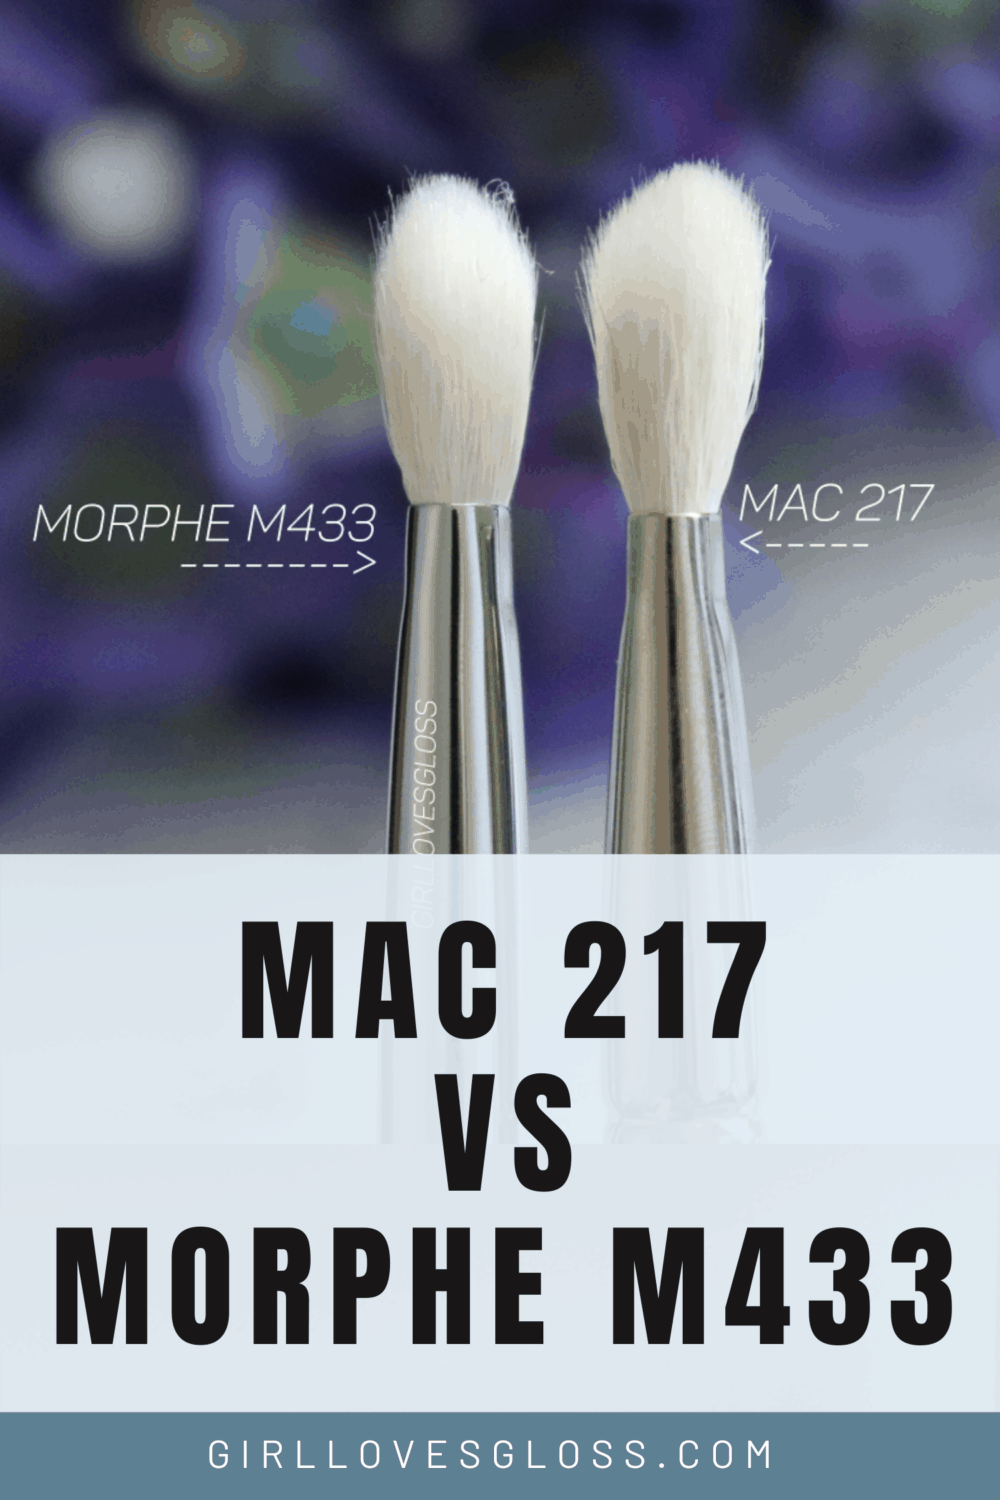 Mac 217 vs Morphe M433